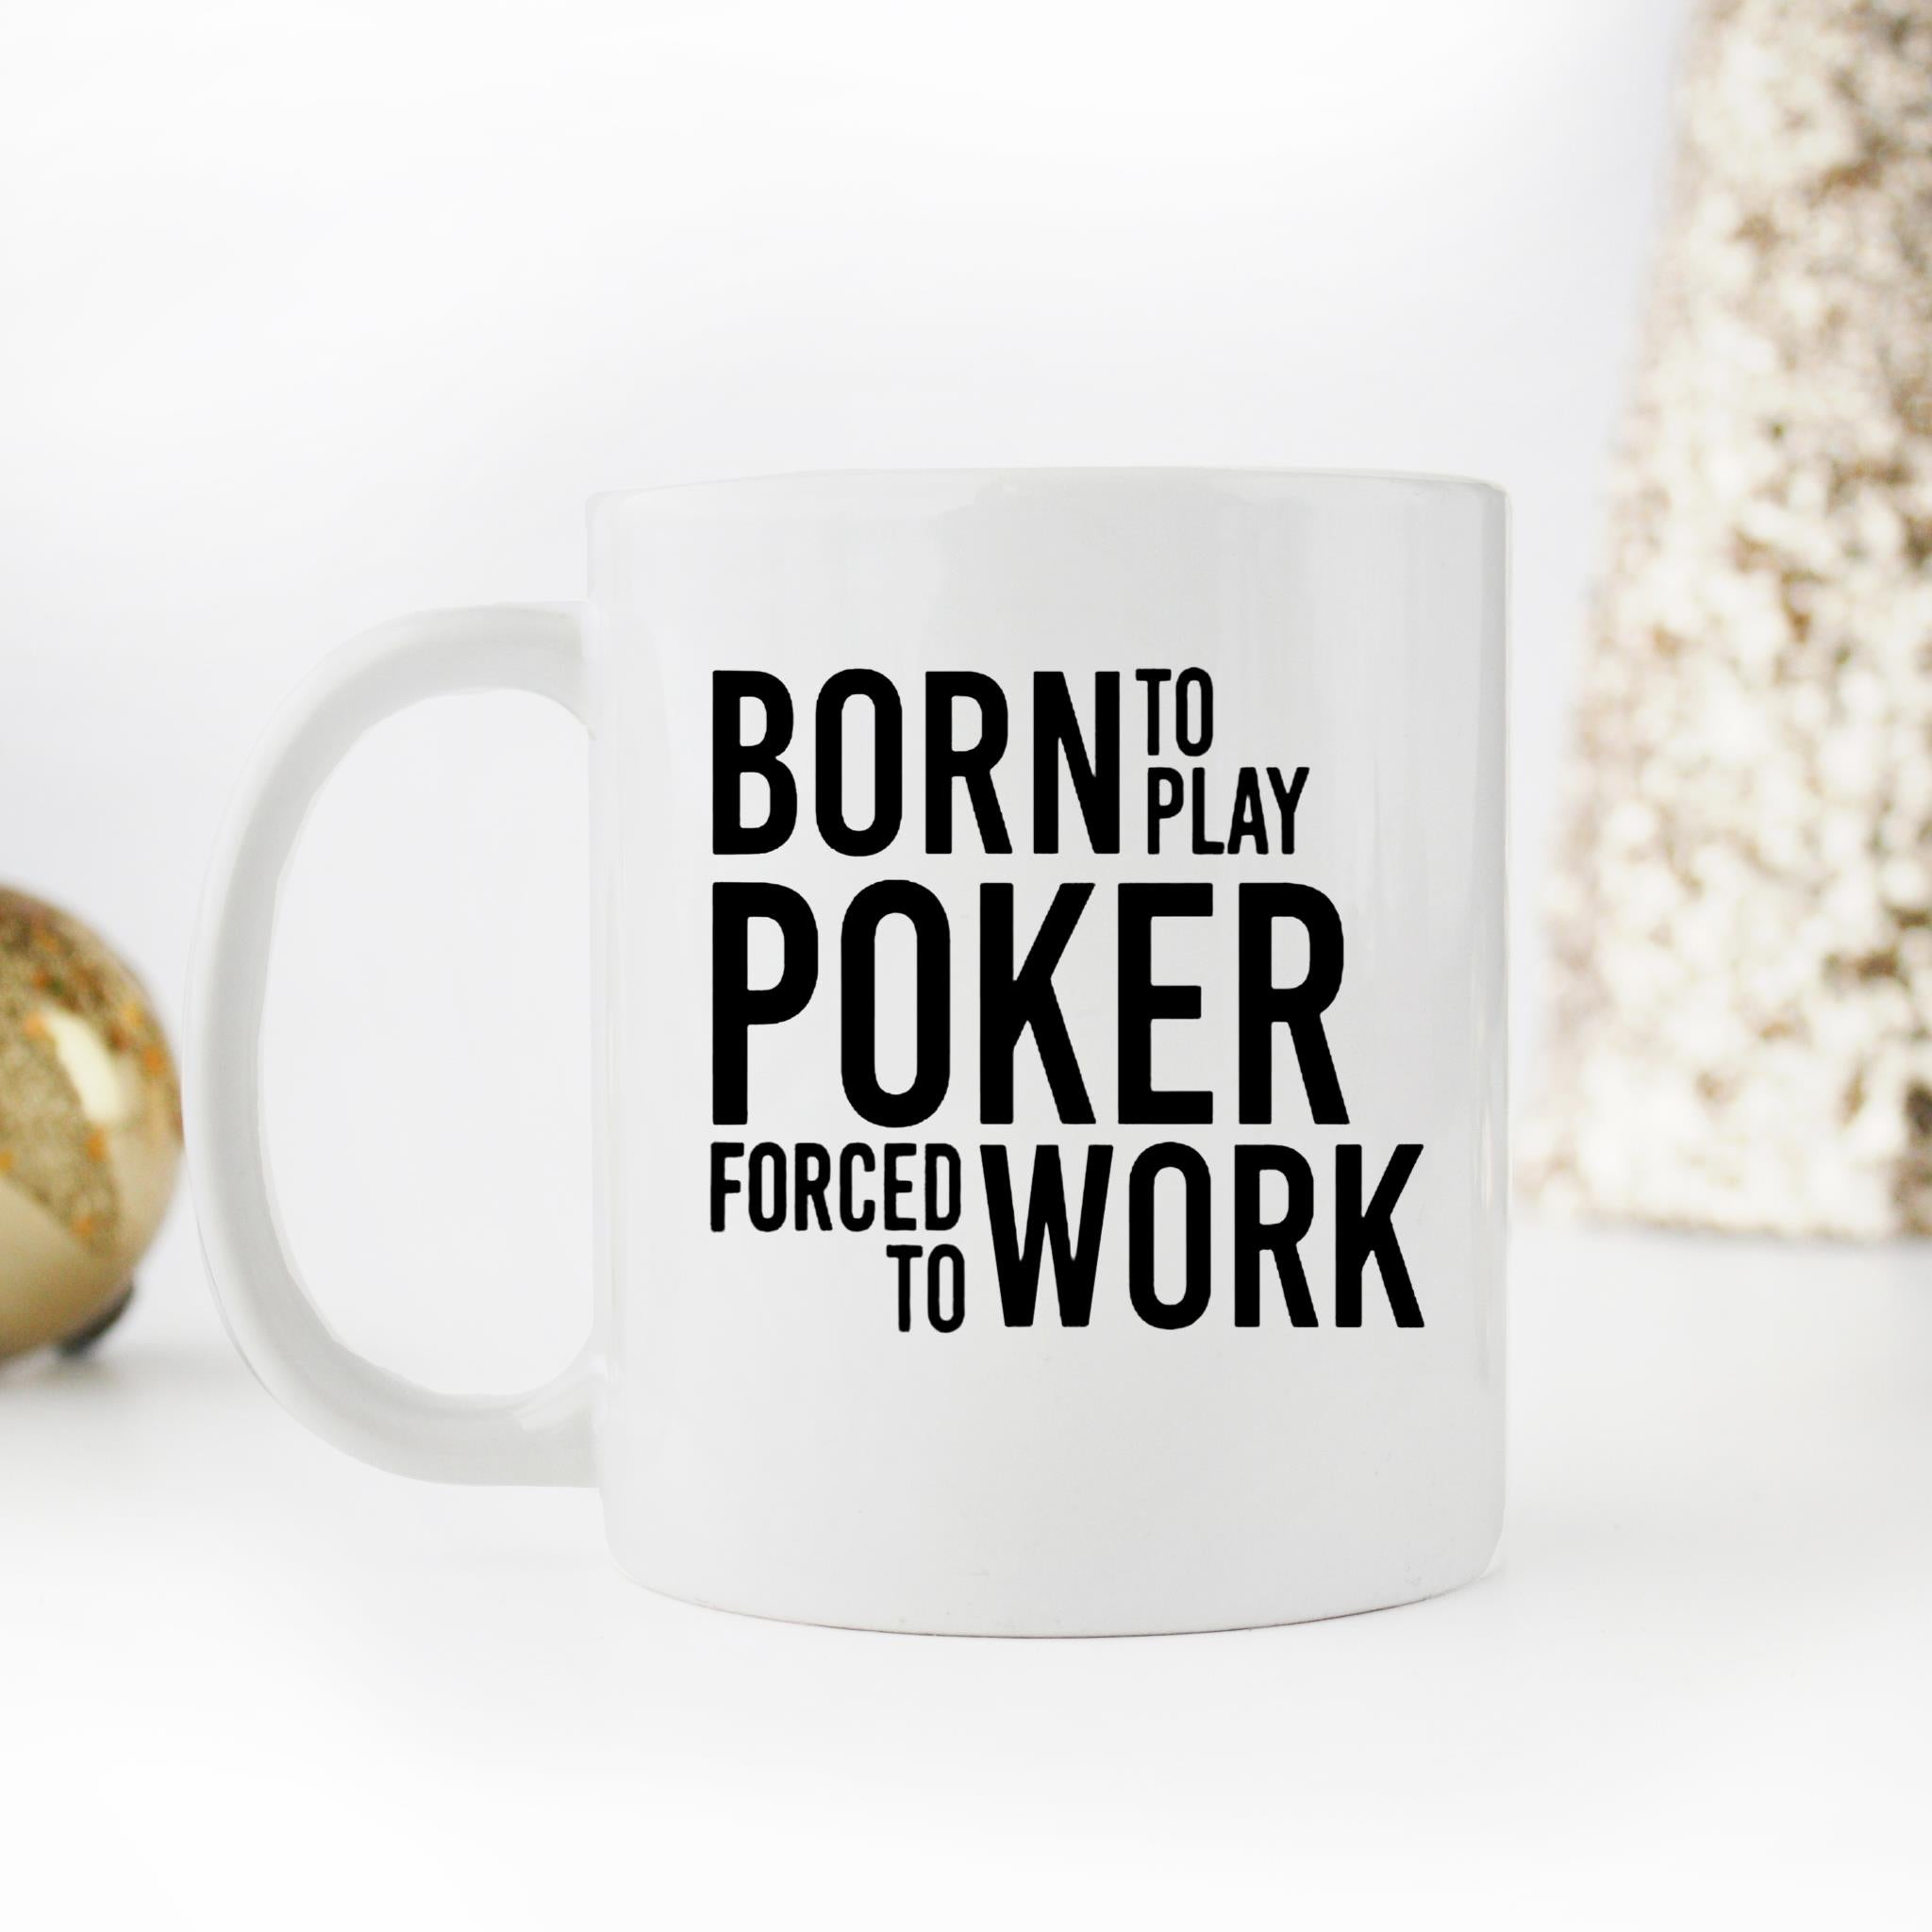 Skitongifts Funny Ceramic Novelty Coffee Mug Born To Play Poker Funny rt1buNz